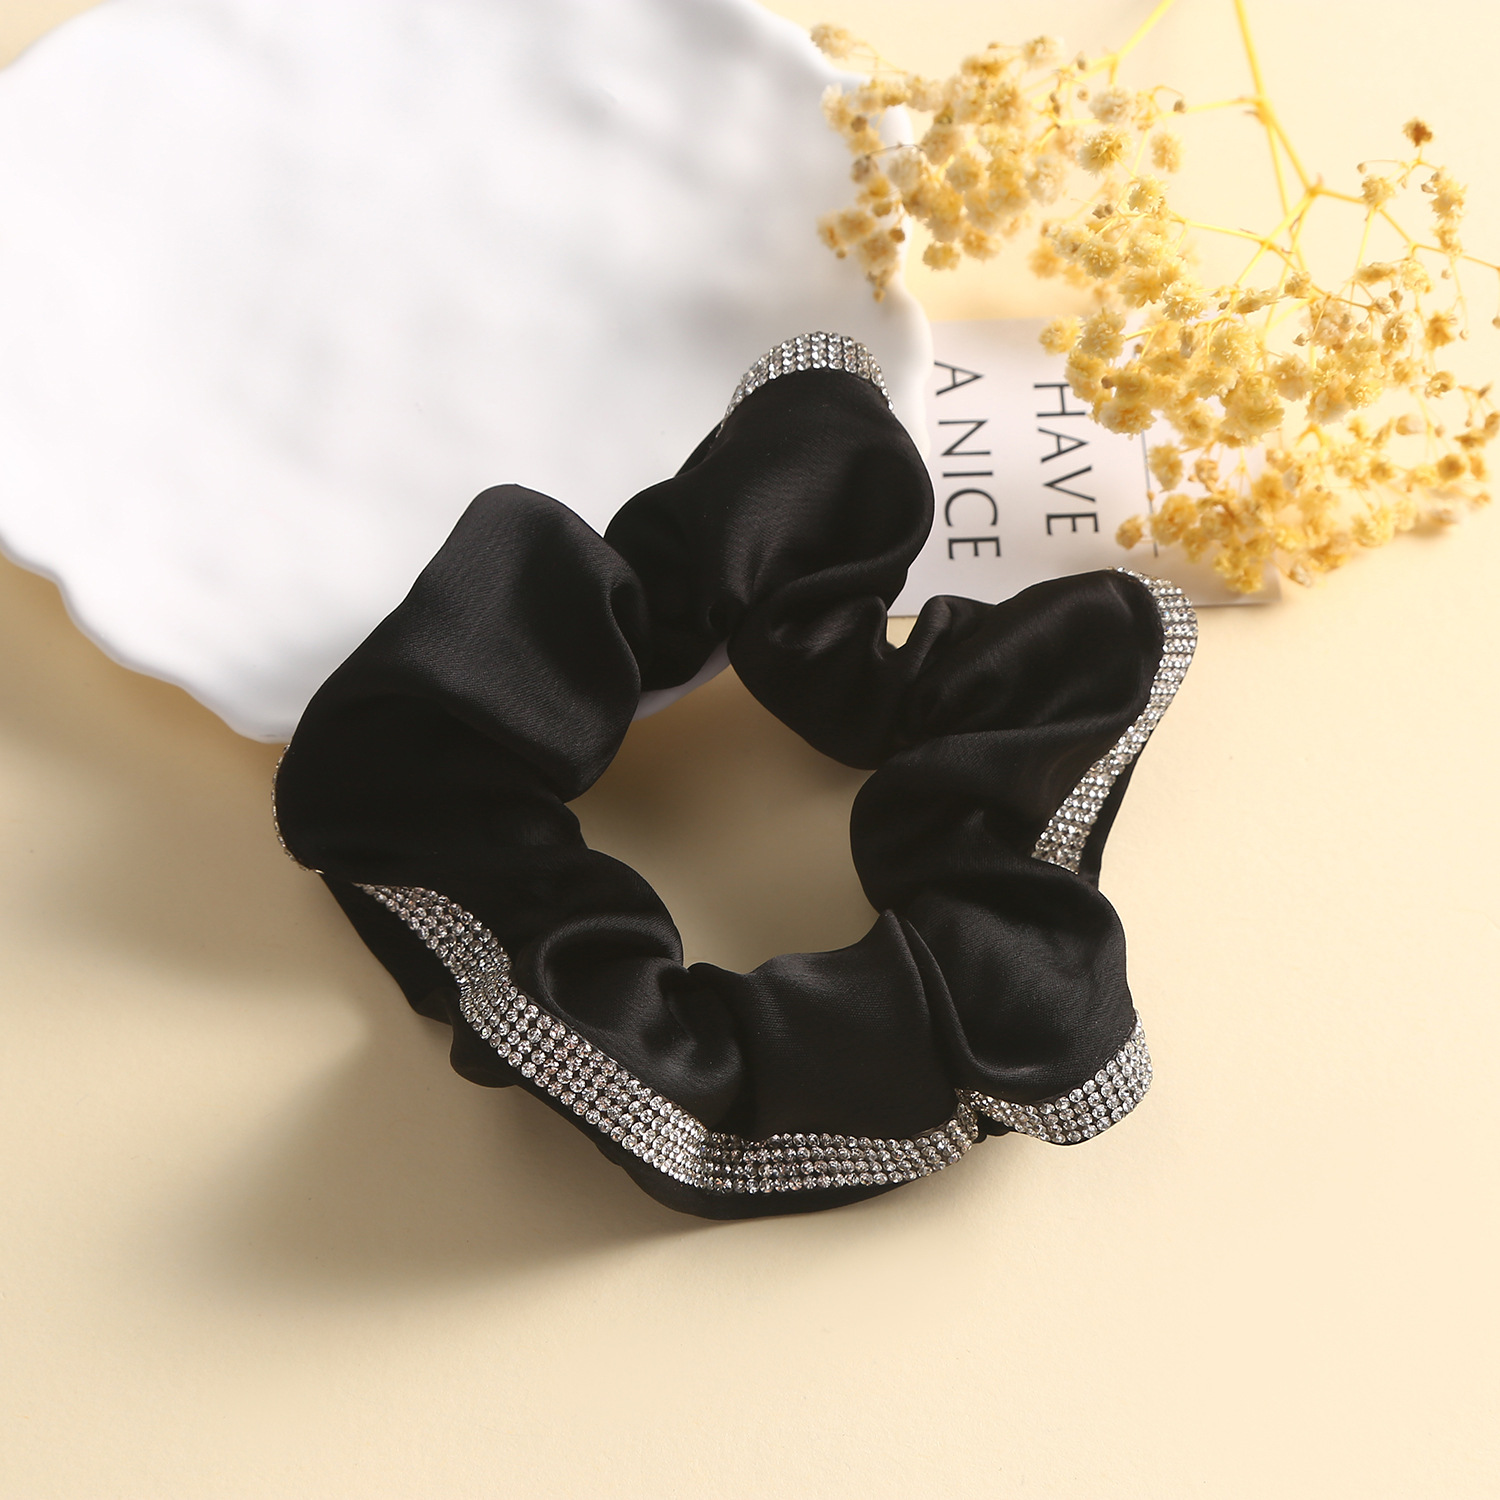 Embellished Sparkly Black Crystal Scrunchies ballet wedding Scrunchie Hair Tie Ponytail Holder Accessory for Women